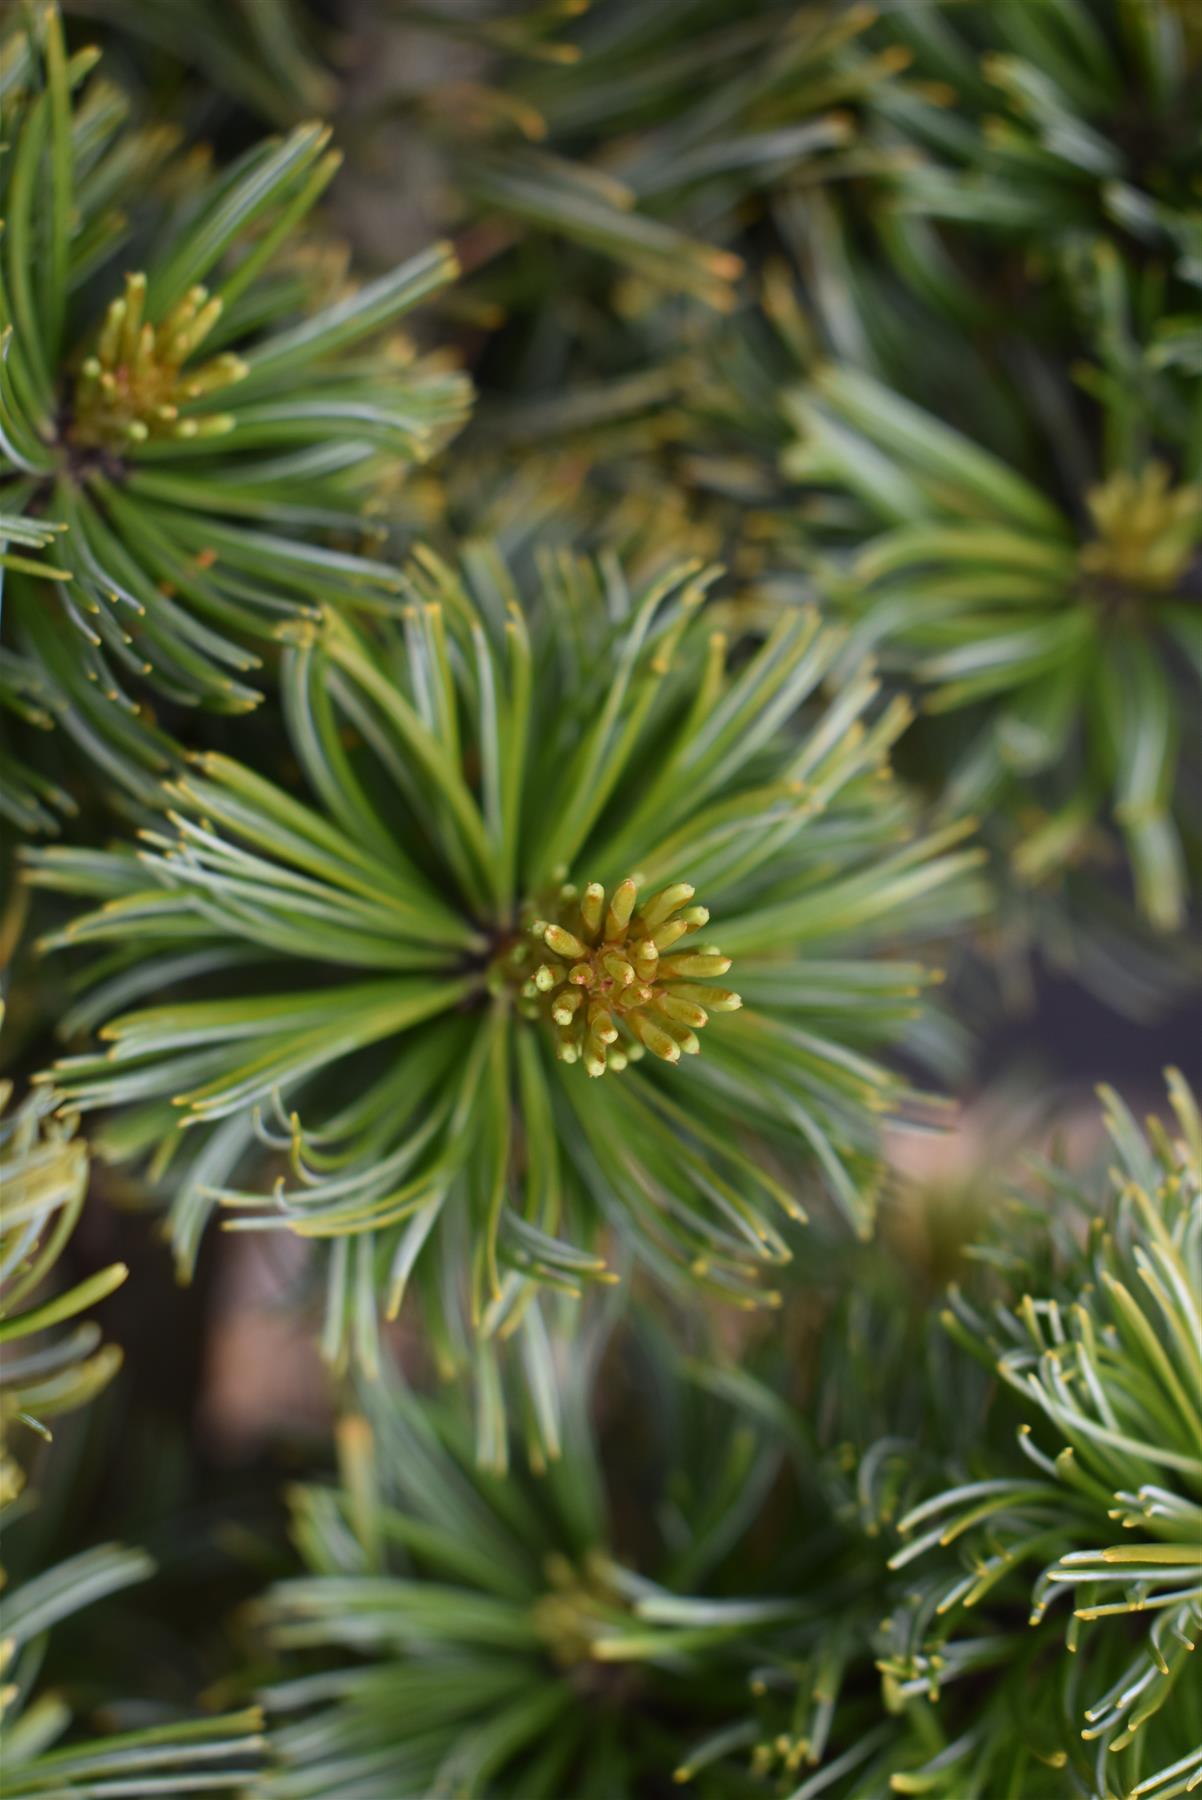 Pinus parviflora 'Ara kawa' | Japanese white pine - Height 70-80cm - Width 40-50cm - 11lt